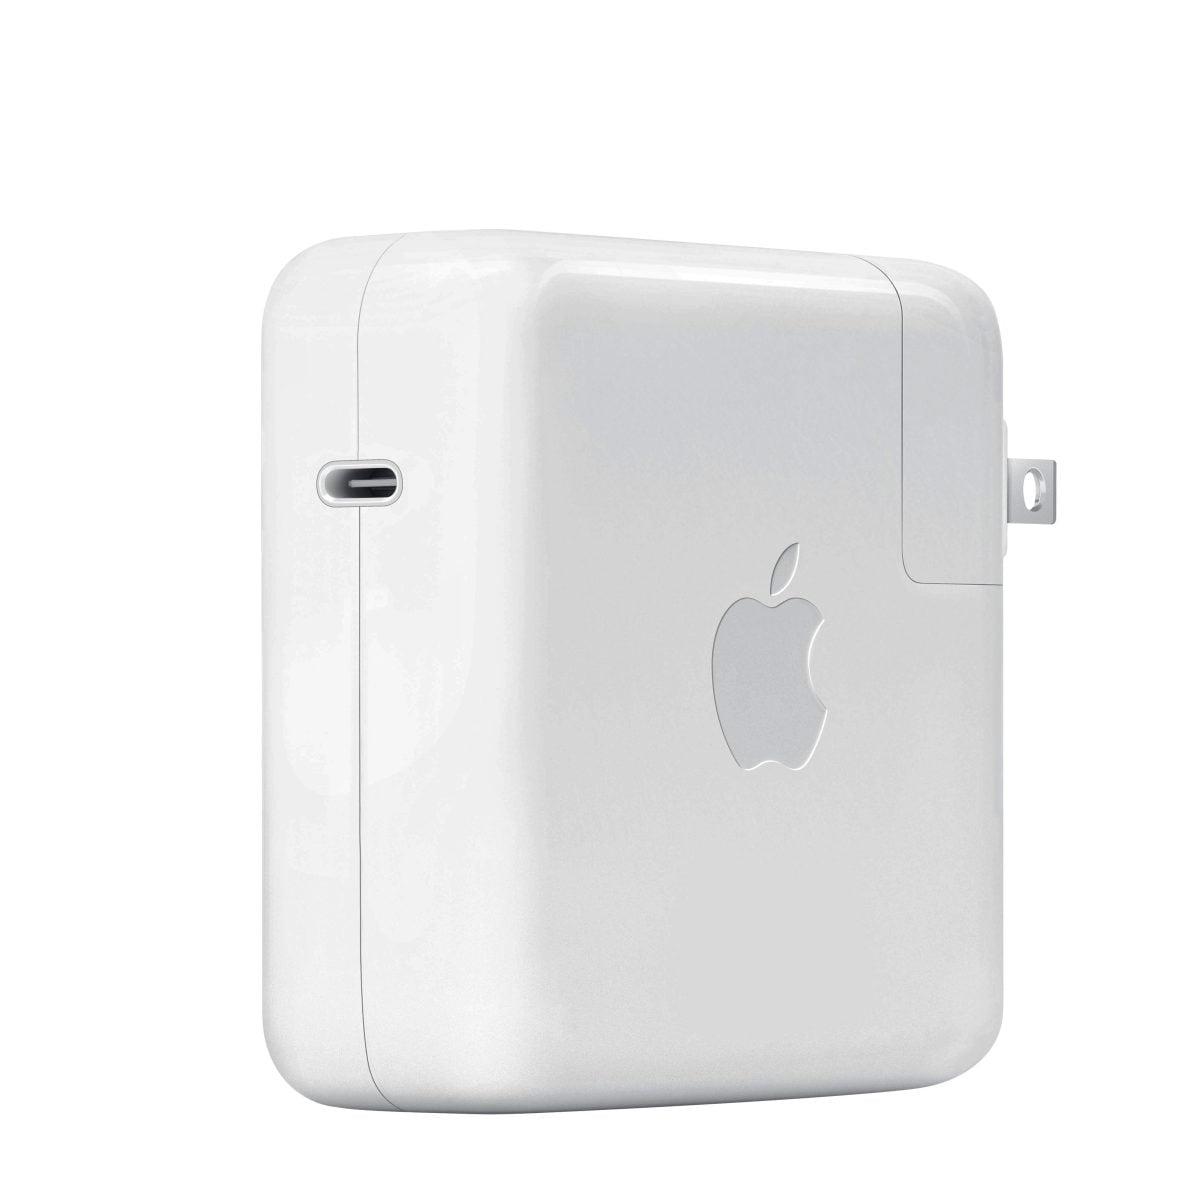 Apple - محول طاقة Usb-C بقوة 67 واط لجهاز Macbook Pro مقاس 13 بوصة (2016 والإصدارات الأحدث) أو Macbook Pro مقاس 14 بوصة - أبيض